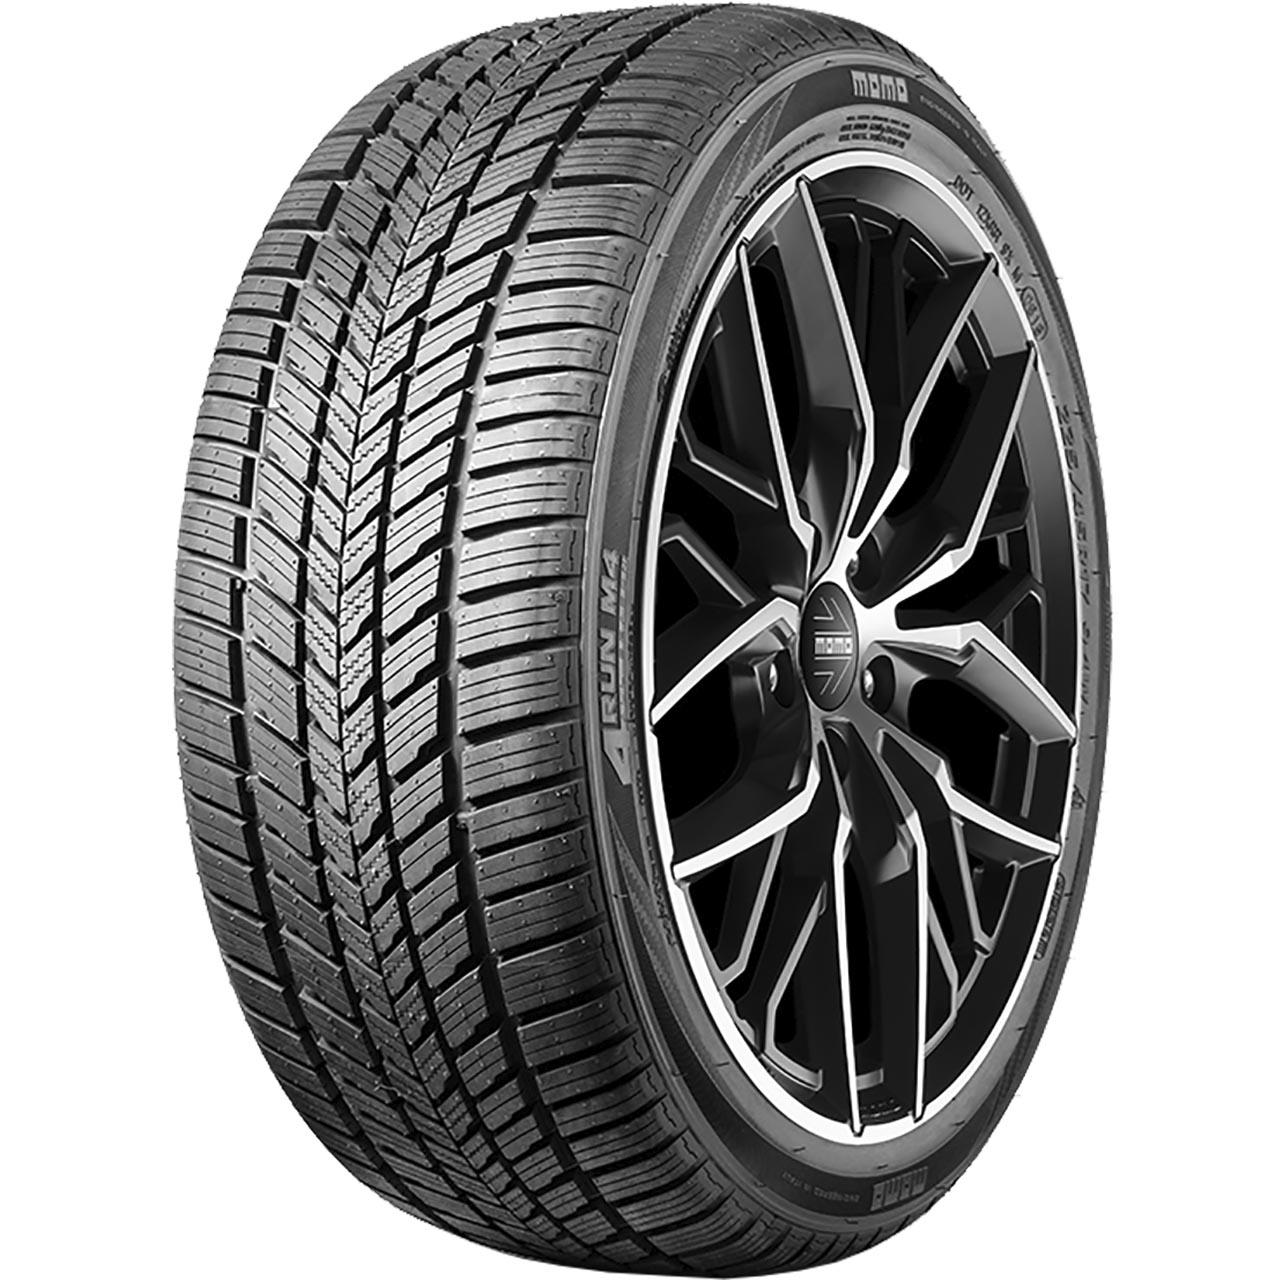 Momo Tire M 4 Four Season 225/45R17 94W XL